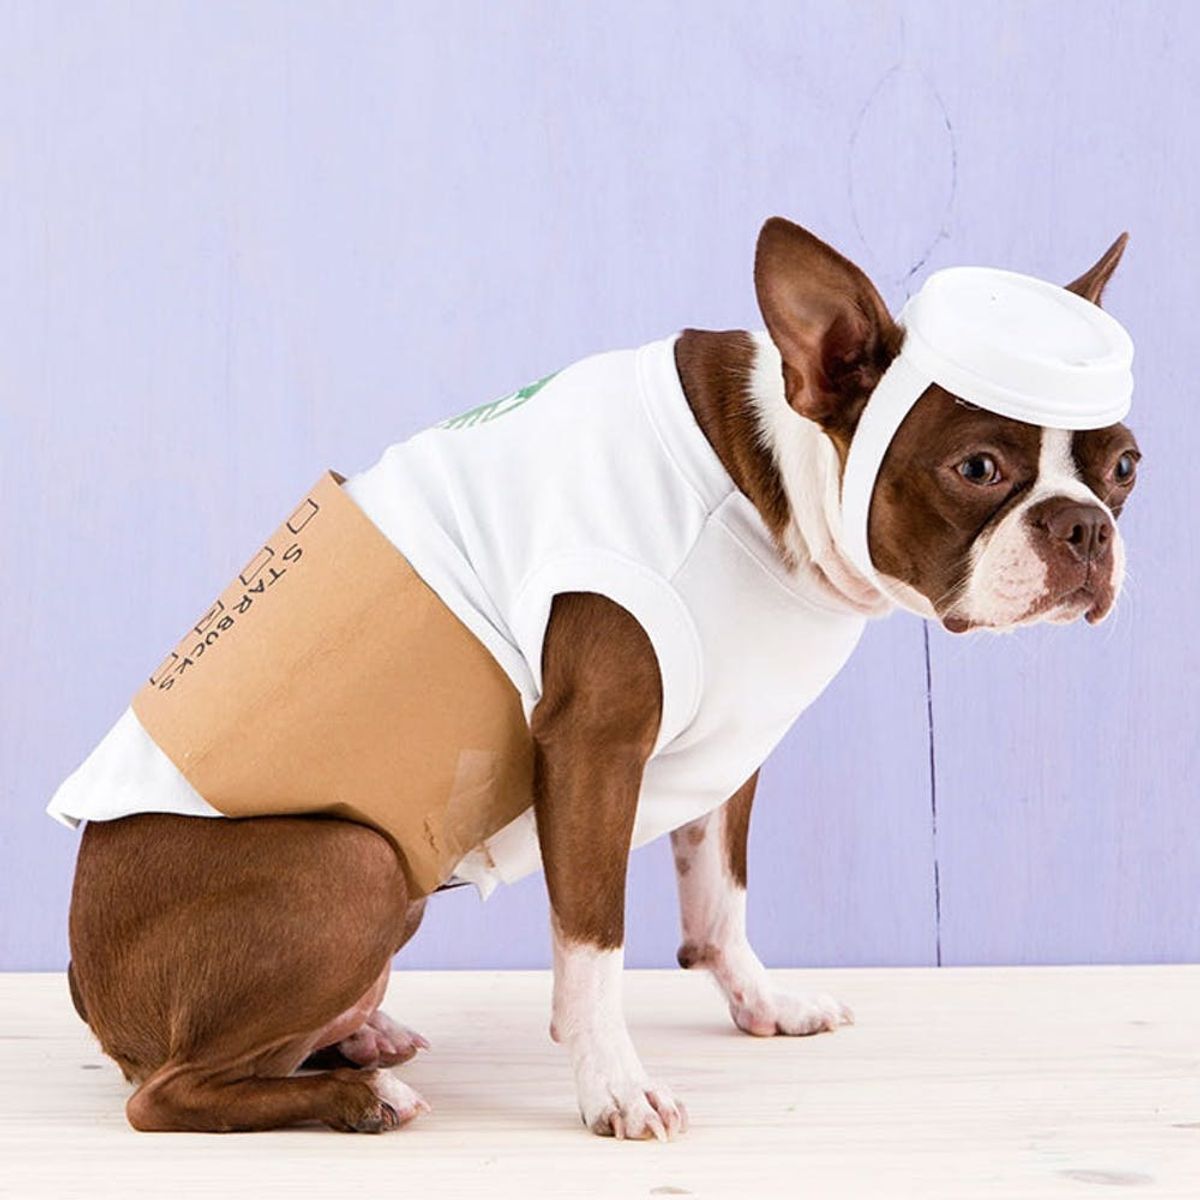 81 Dog Halloween Costume Ideas includes this Starbucks latte dog costume